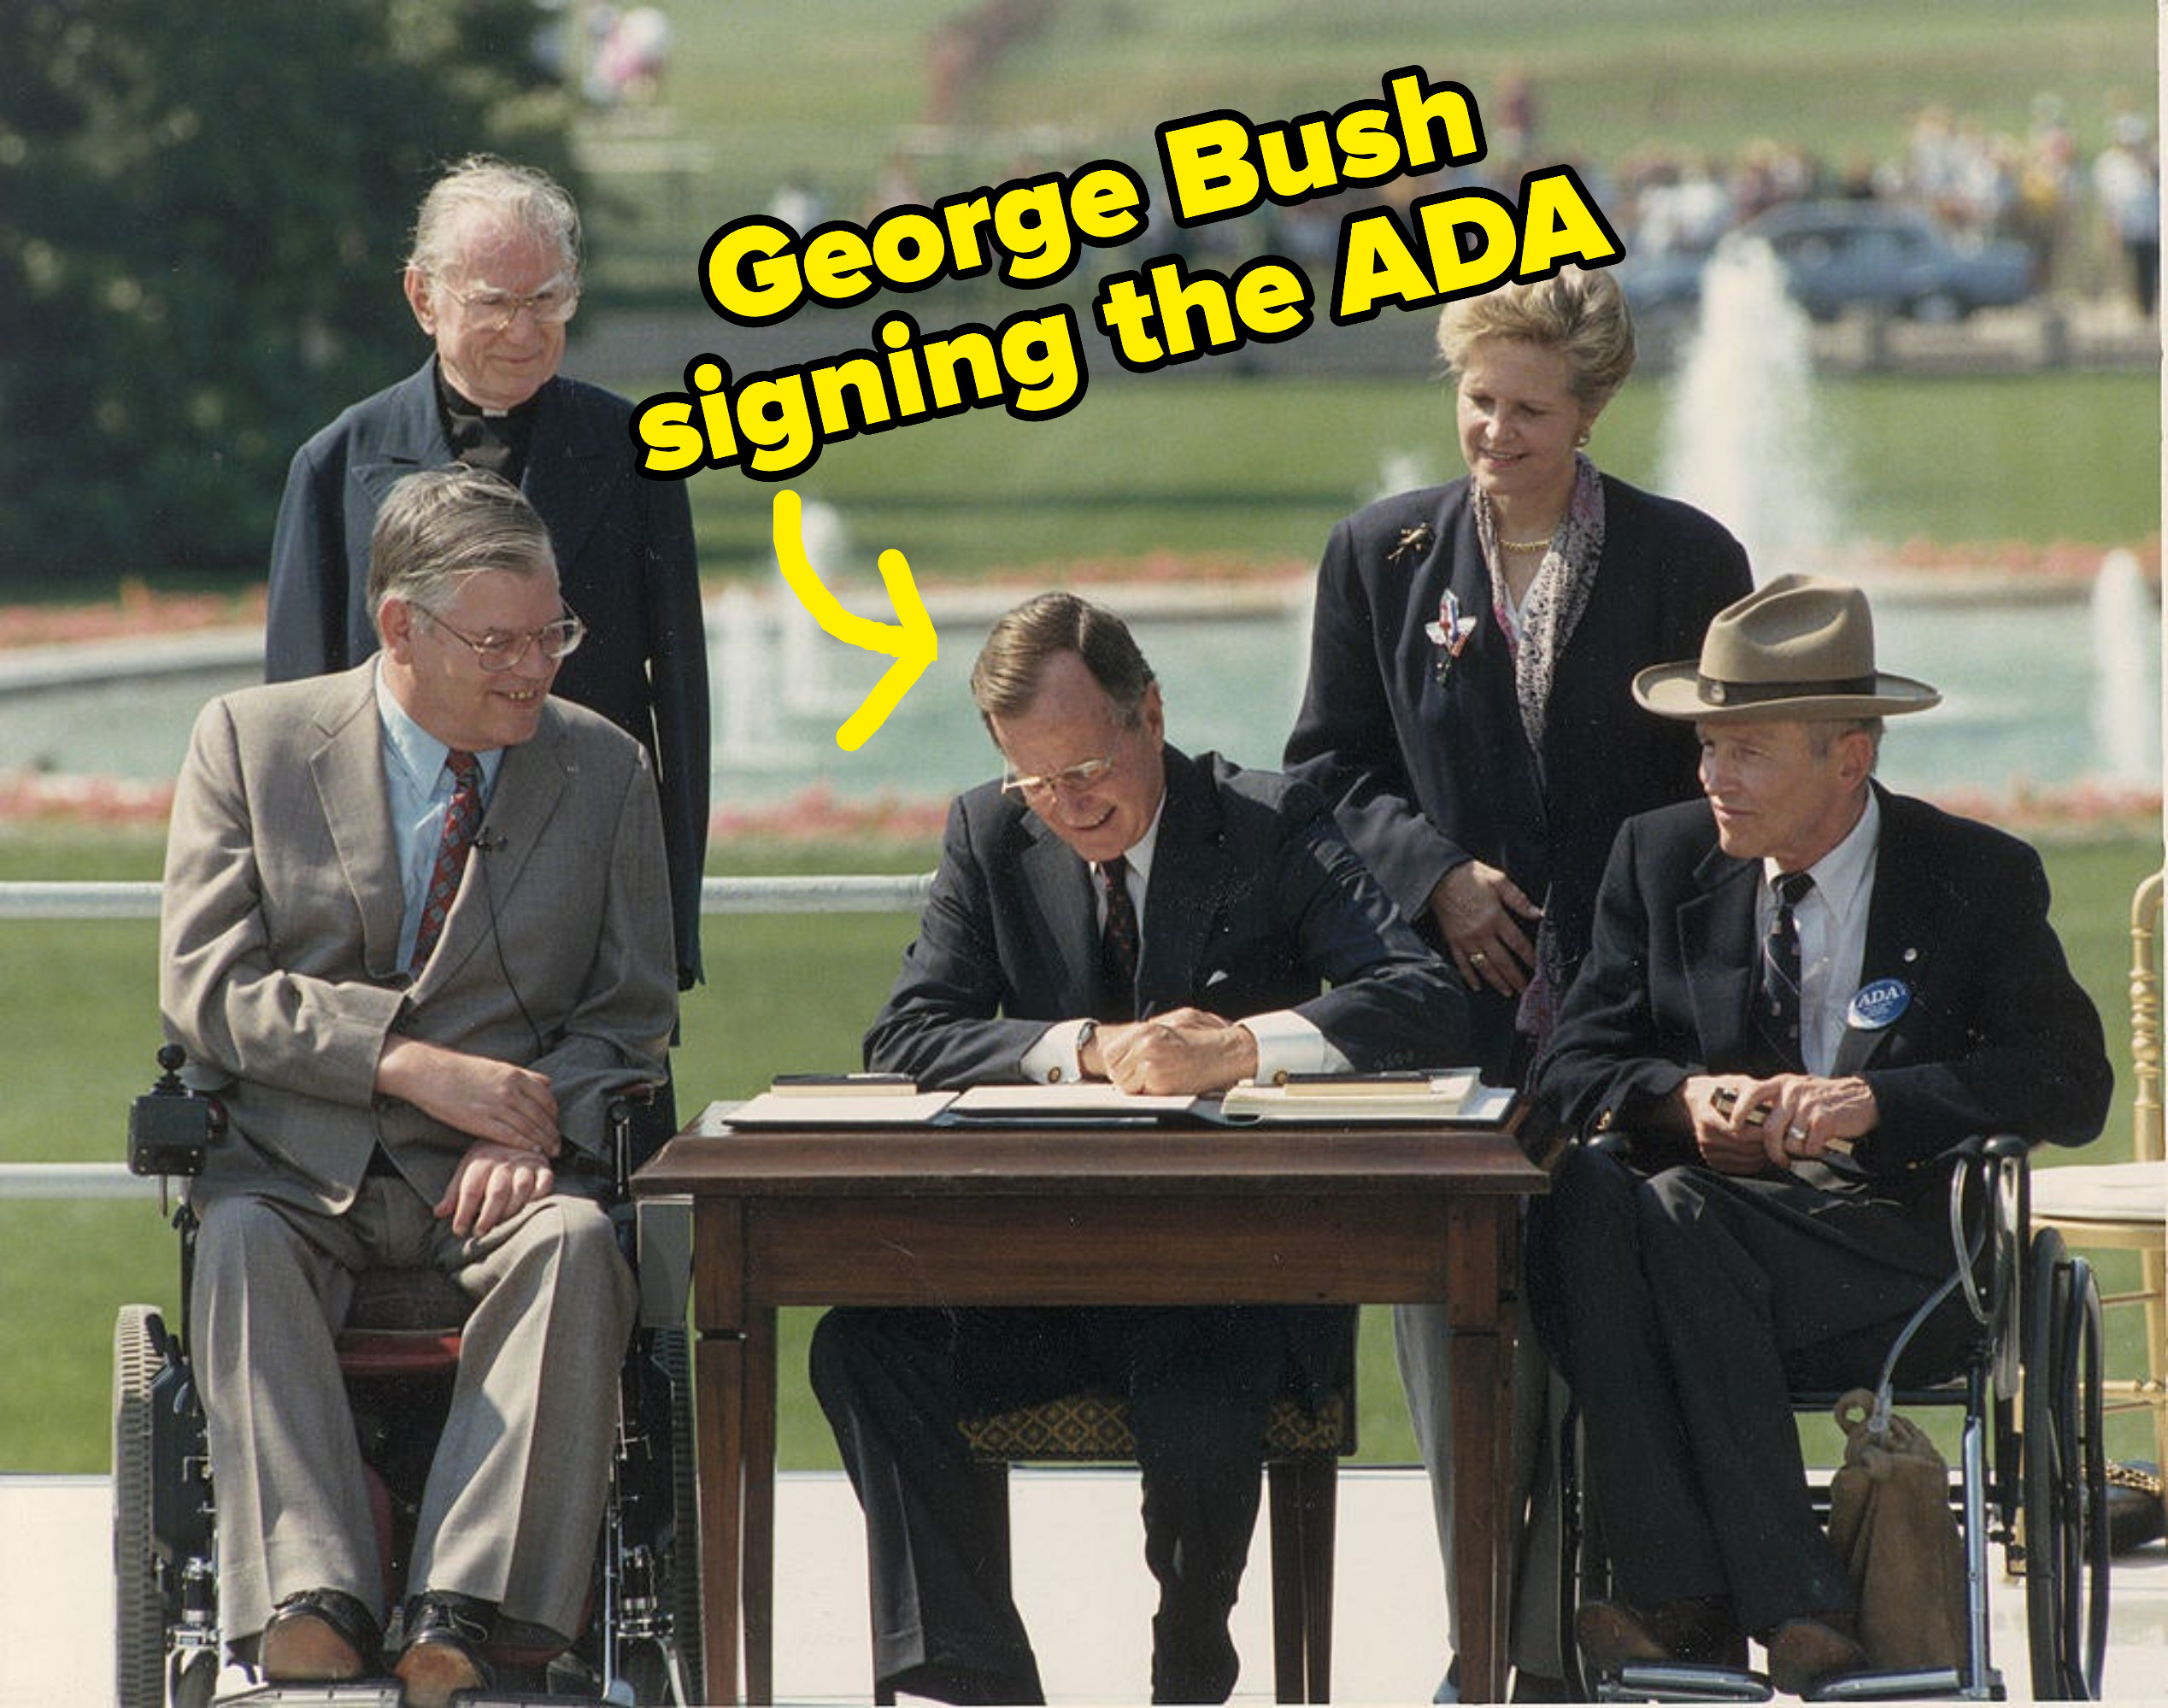 George Bush signing the ADA